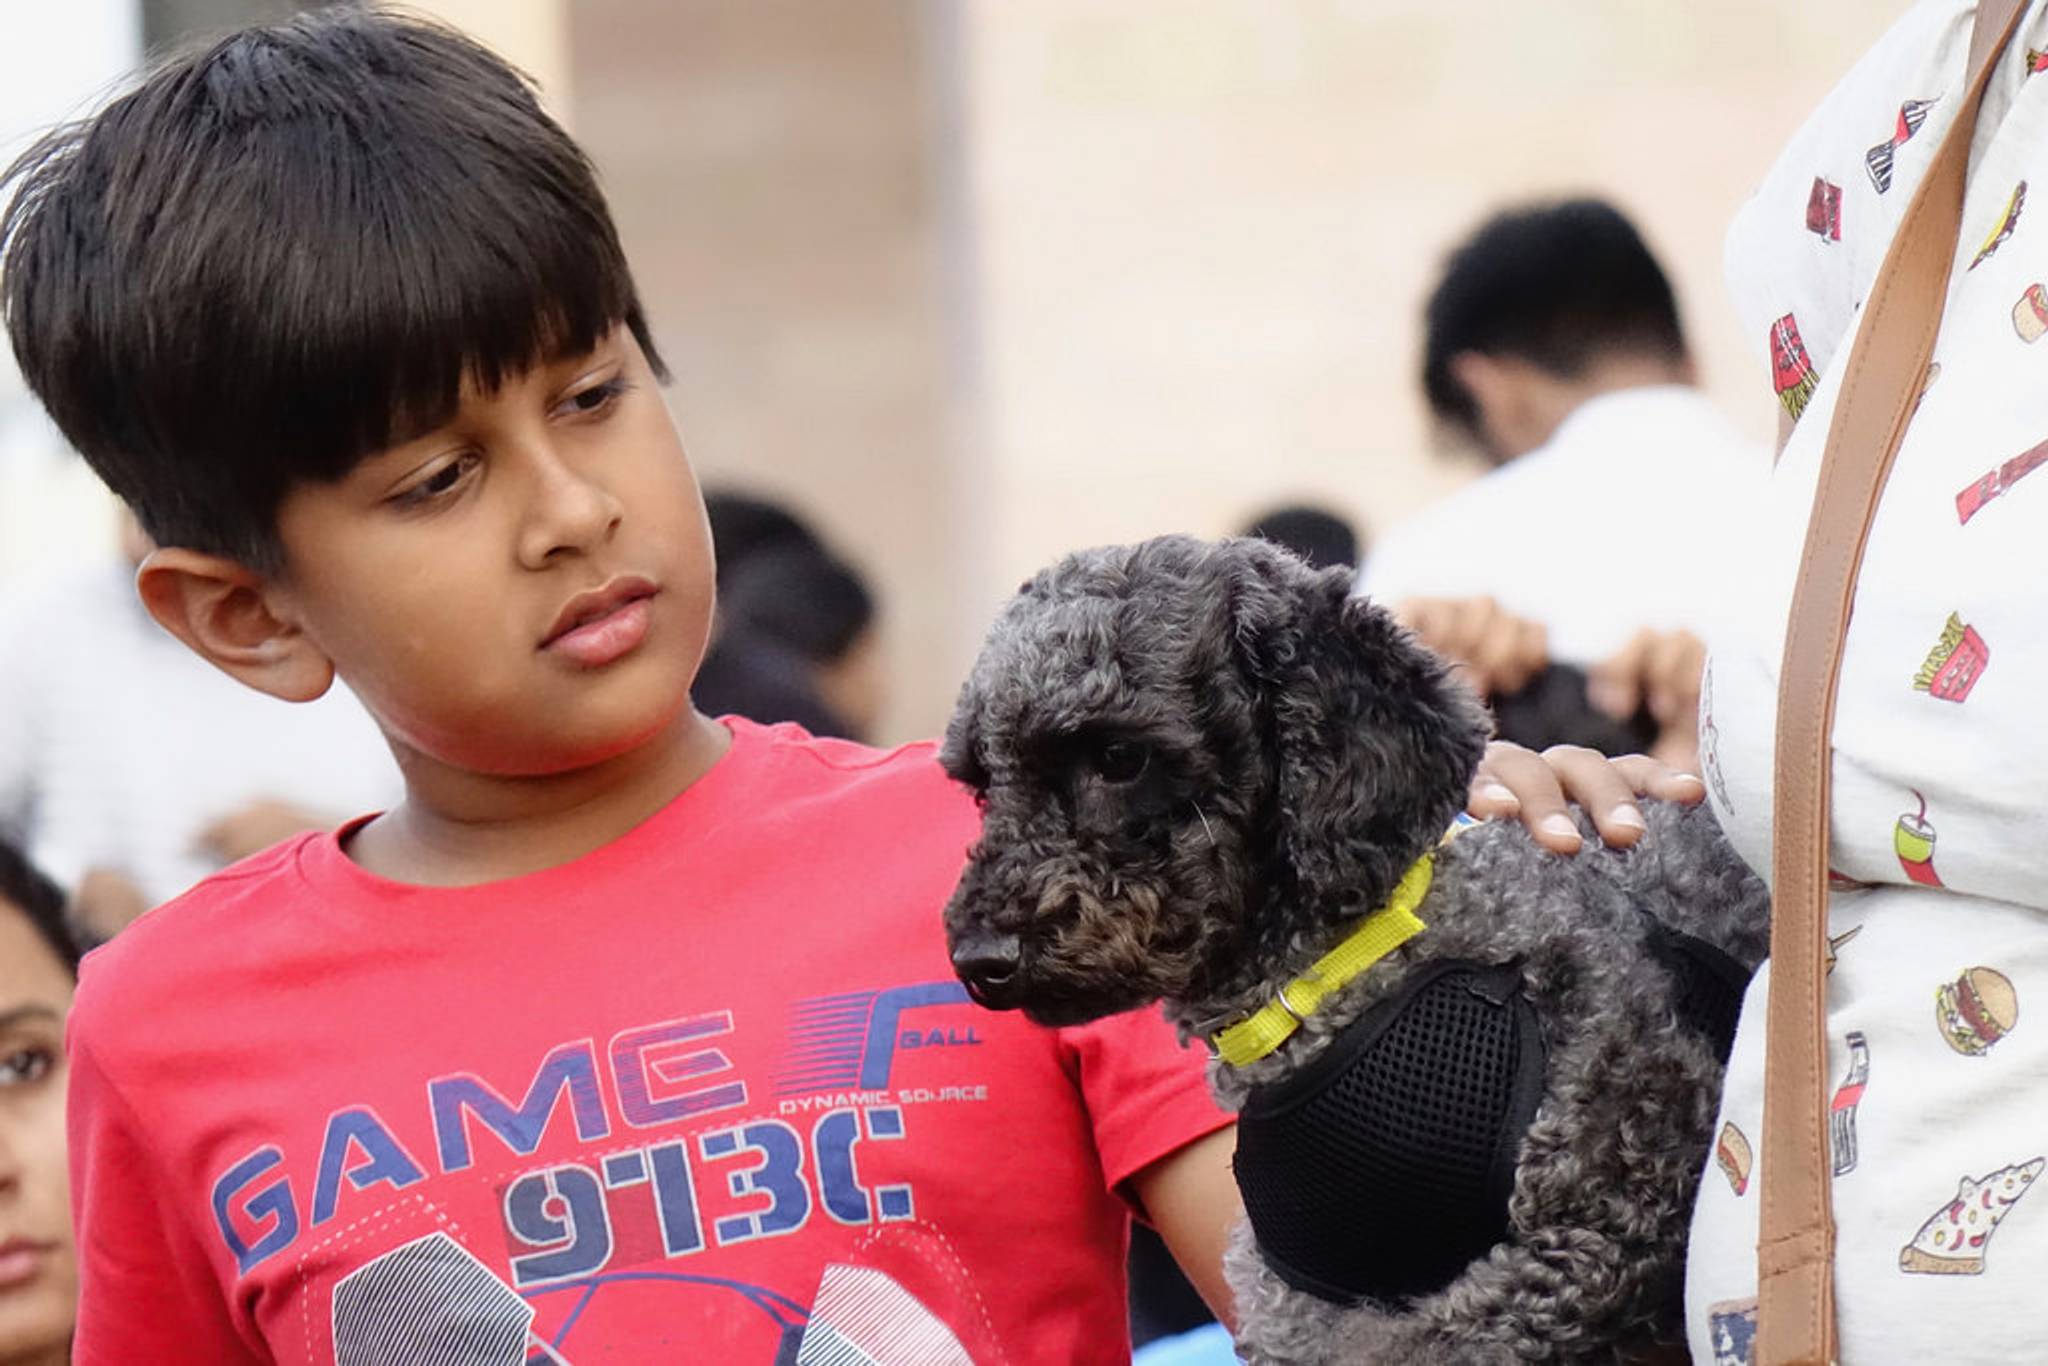 Supercoat is a premium dog food for Indian pet parents